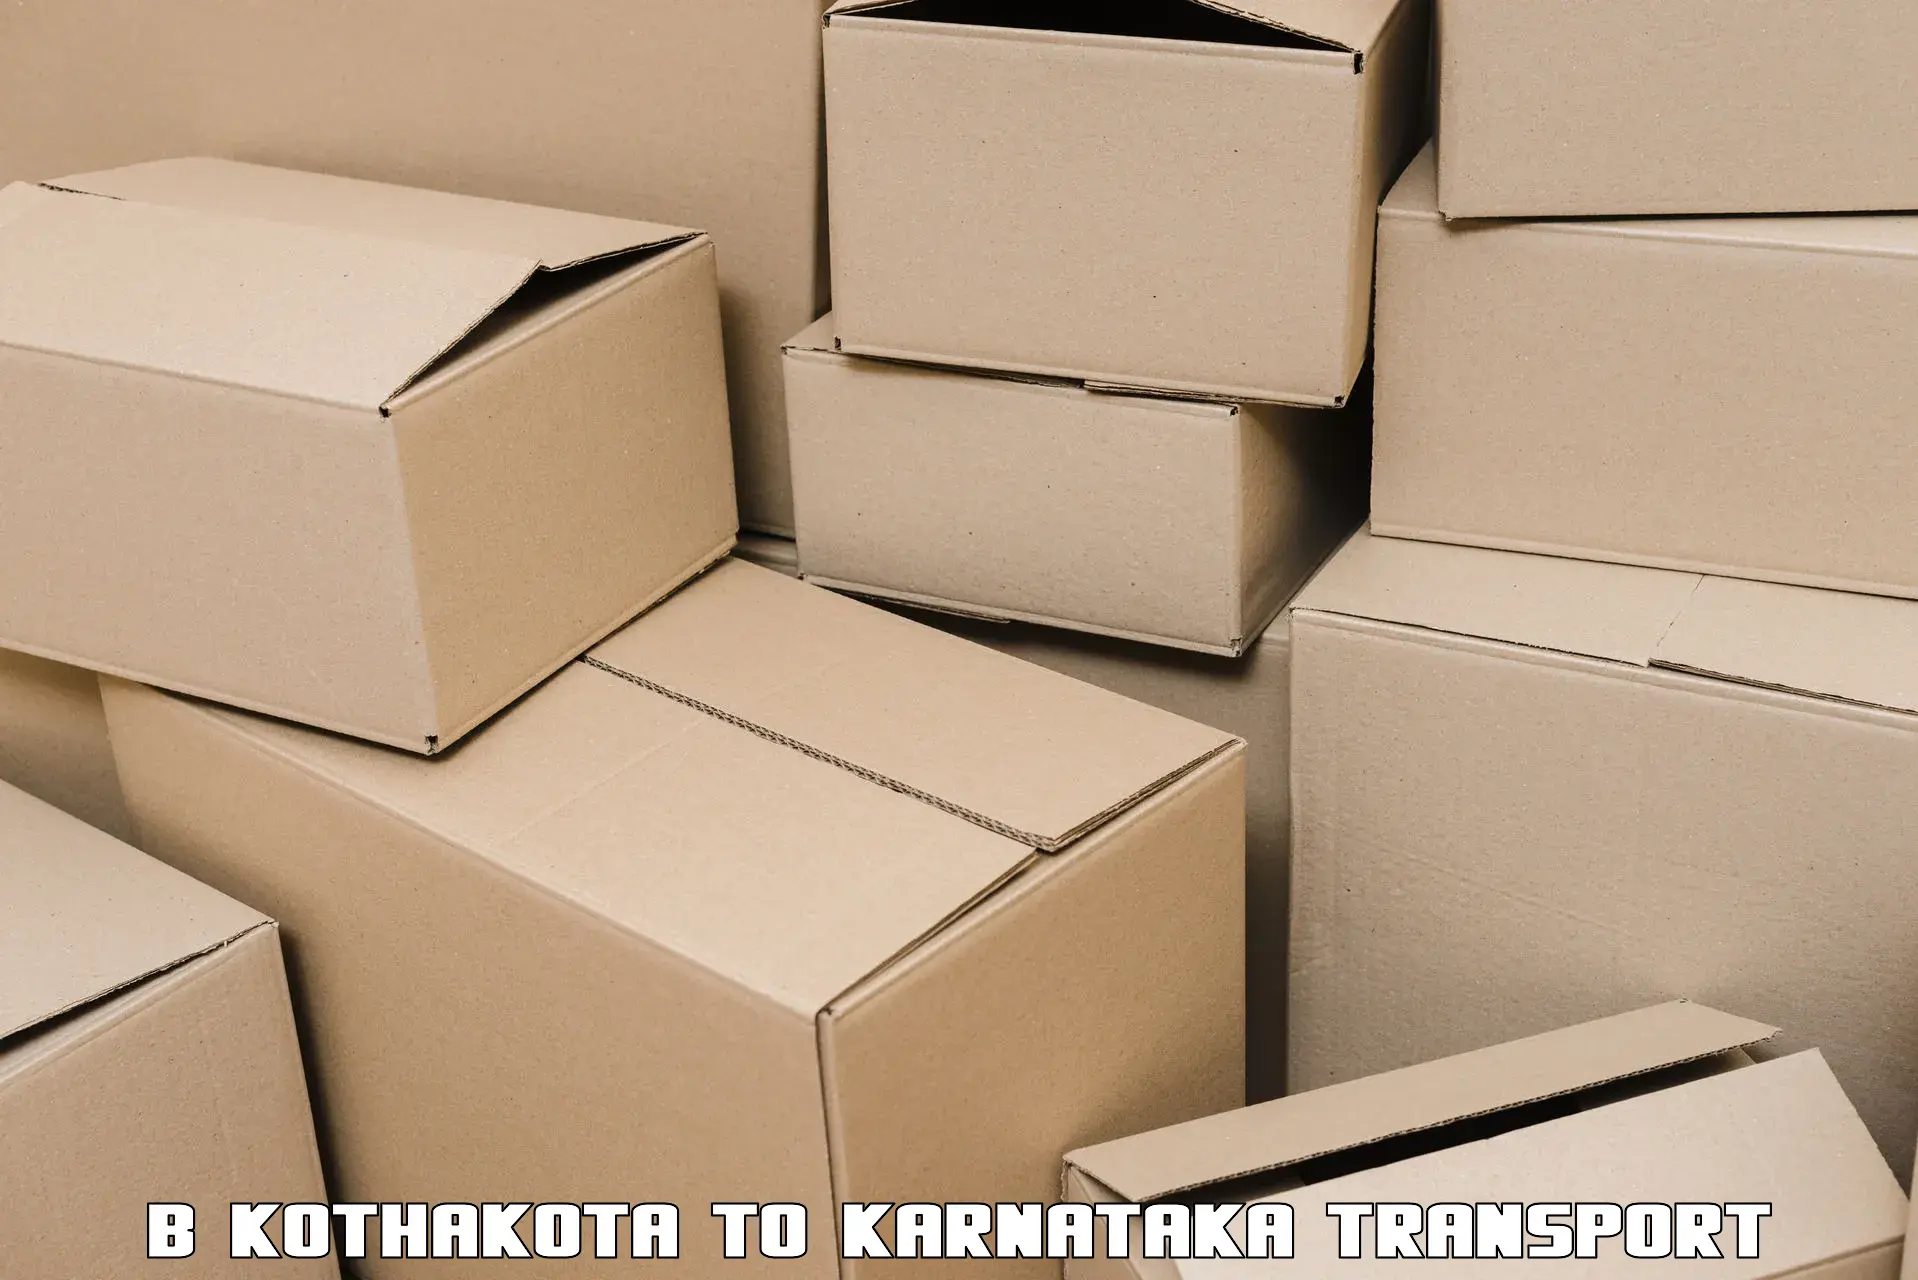 Pick up transport service B Kothakota to Yenepoya Mangalore